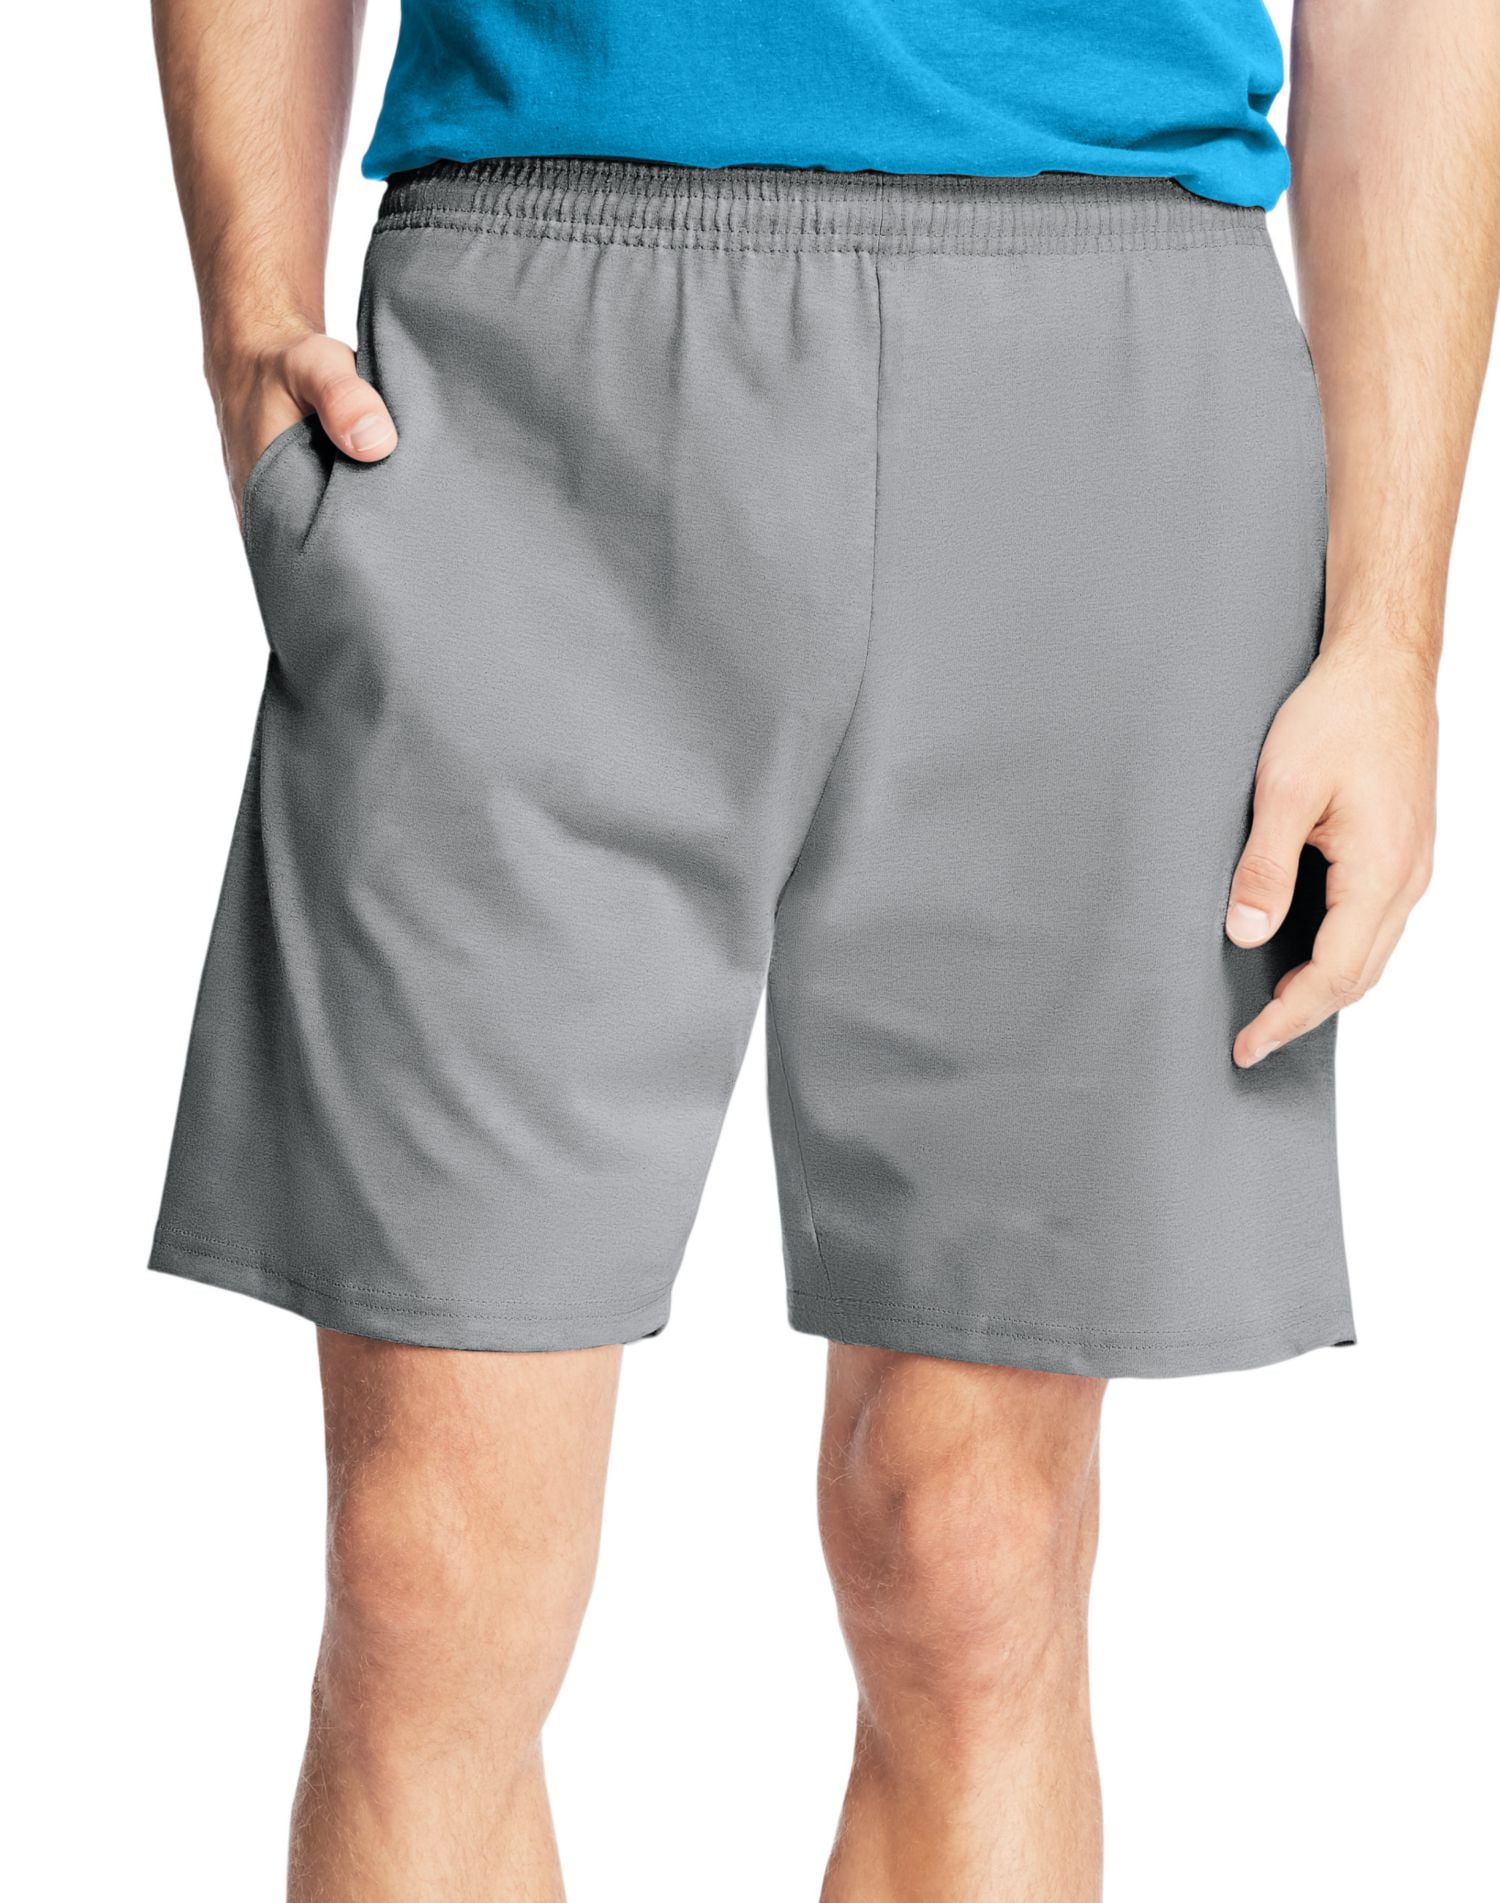 Hanes Men`s Jersey Cotton Shorts, M, Light Steel | Walmart Canada